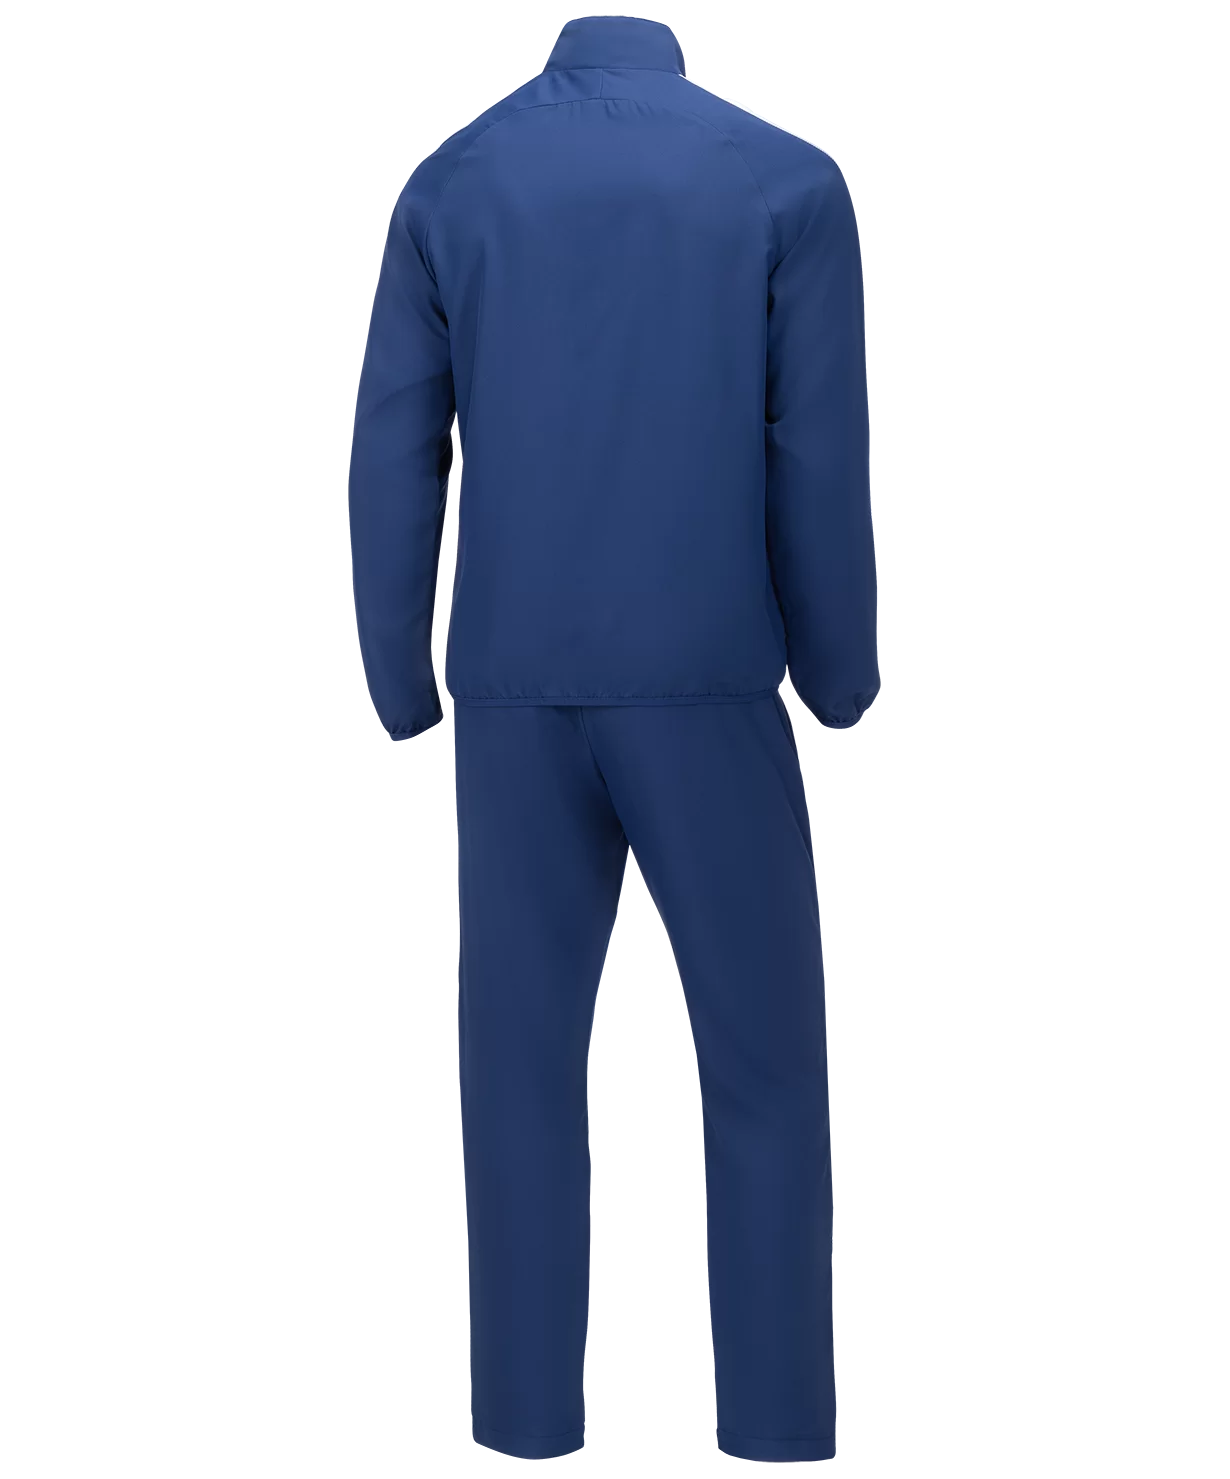 Фото Костюм спортивный CAMP Lined Suit, темно-синий/темно-синий, детский Jögel со склада магазина СпортЕВ